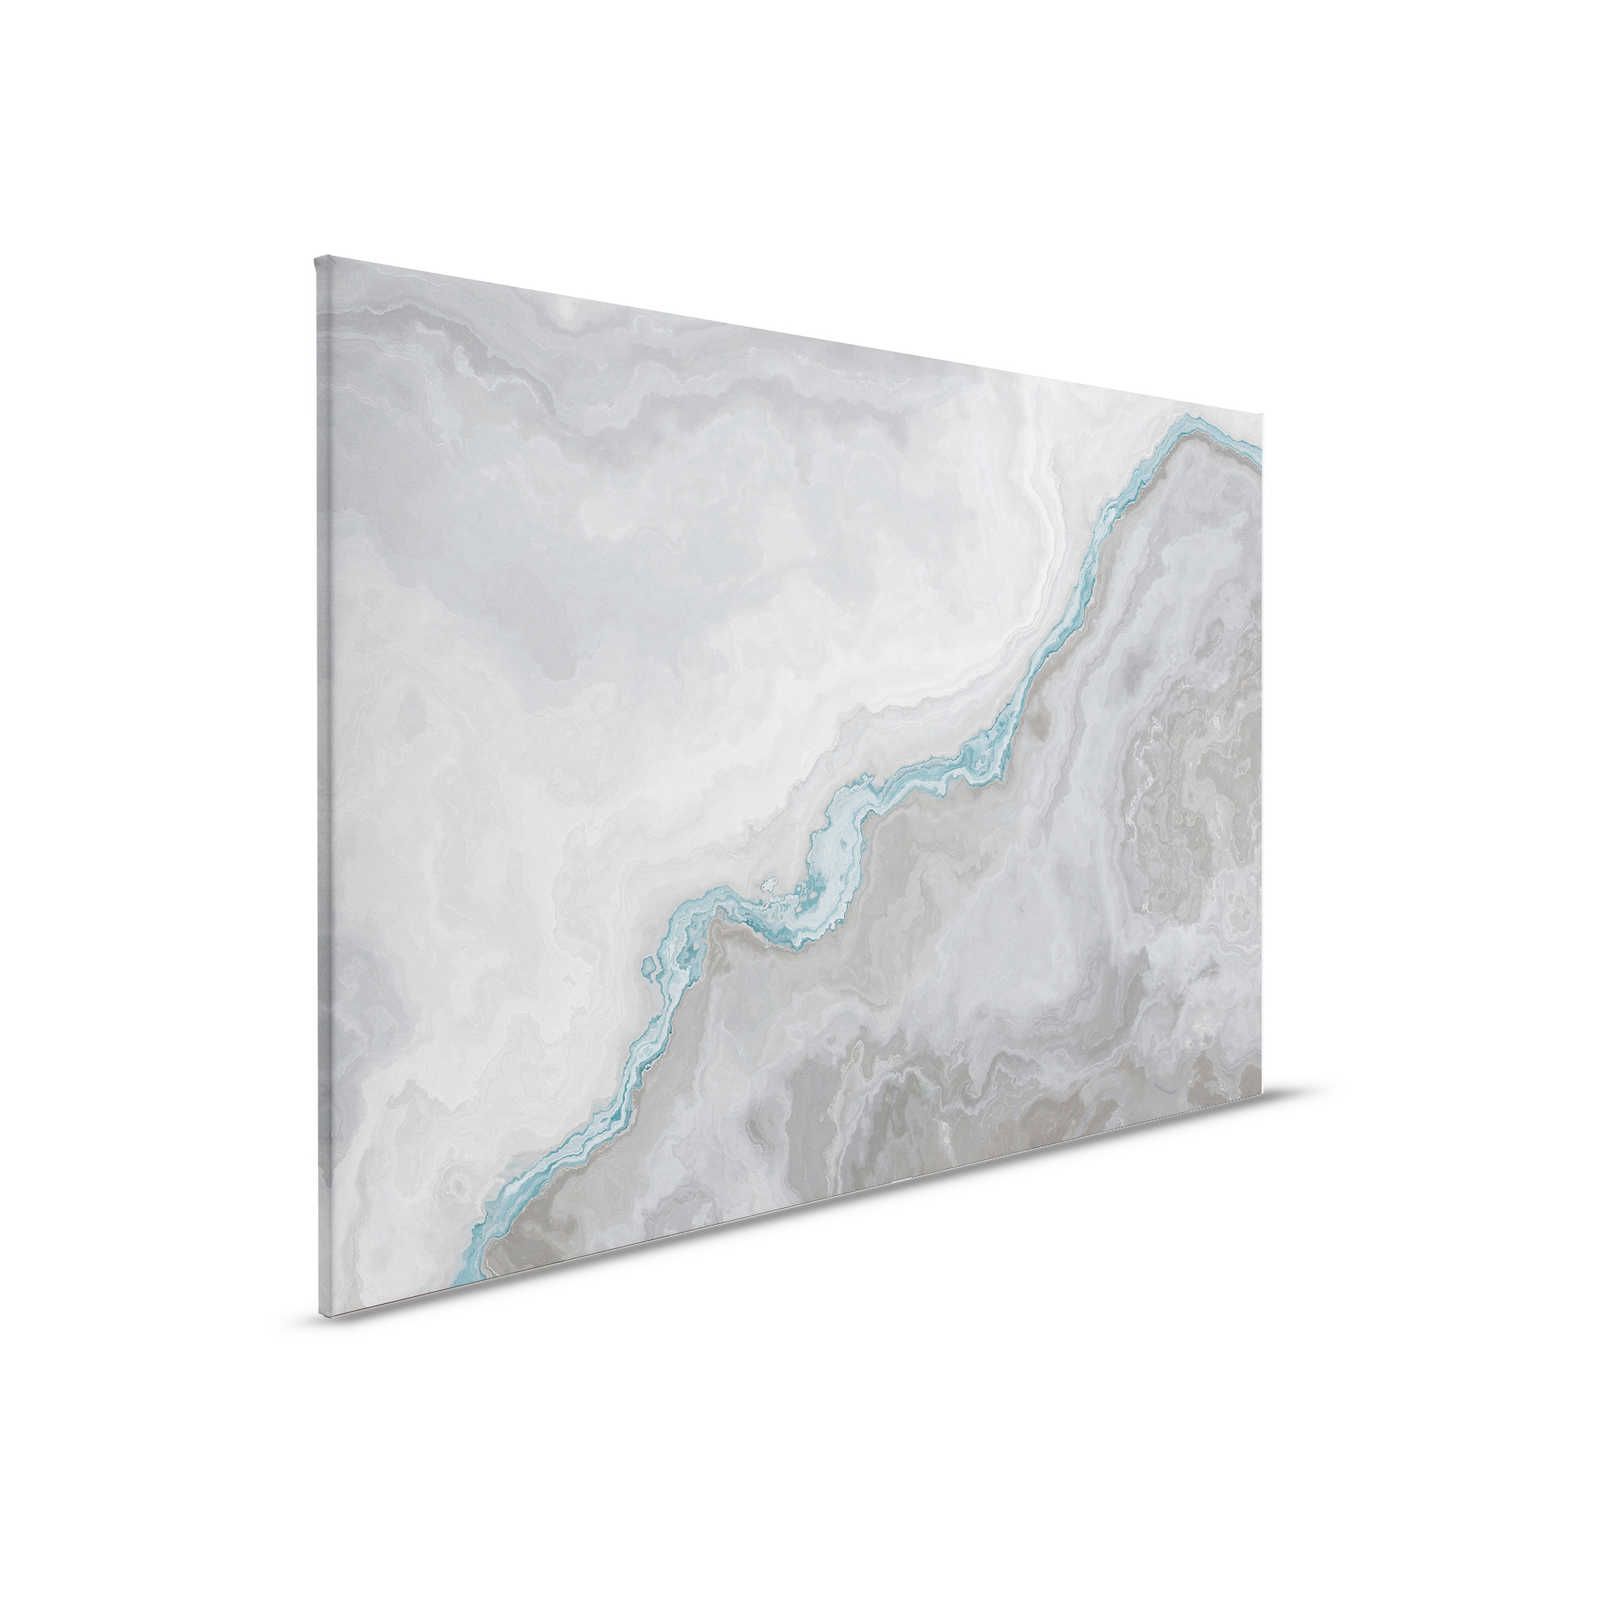 Leinwandbild marmoriert mit Quarz-Optik – 0,90 m x 0,60 m
